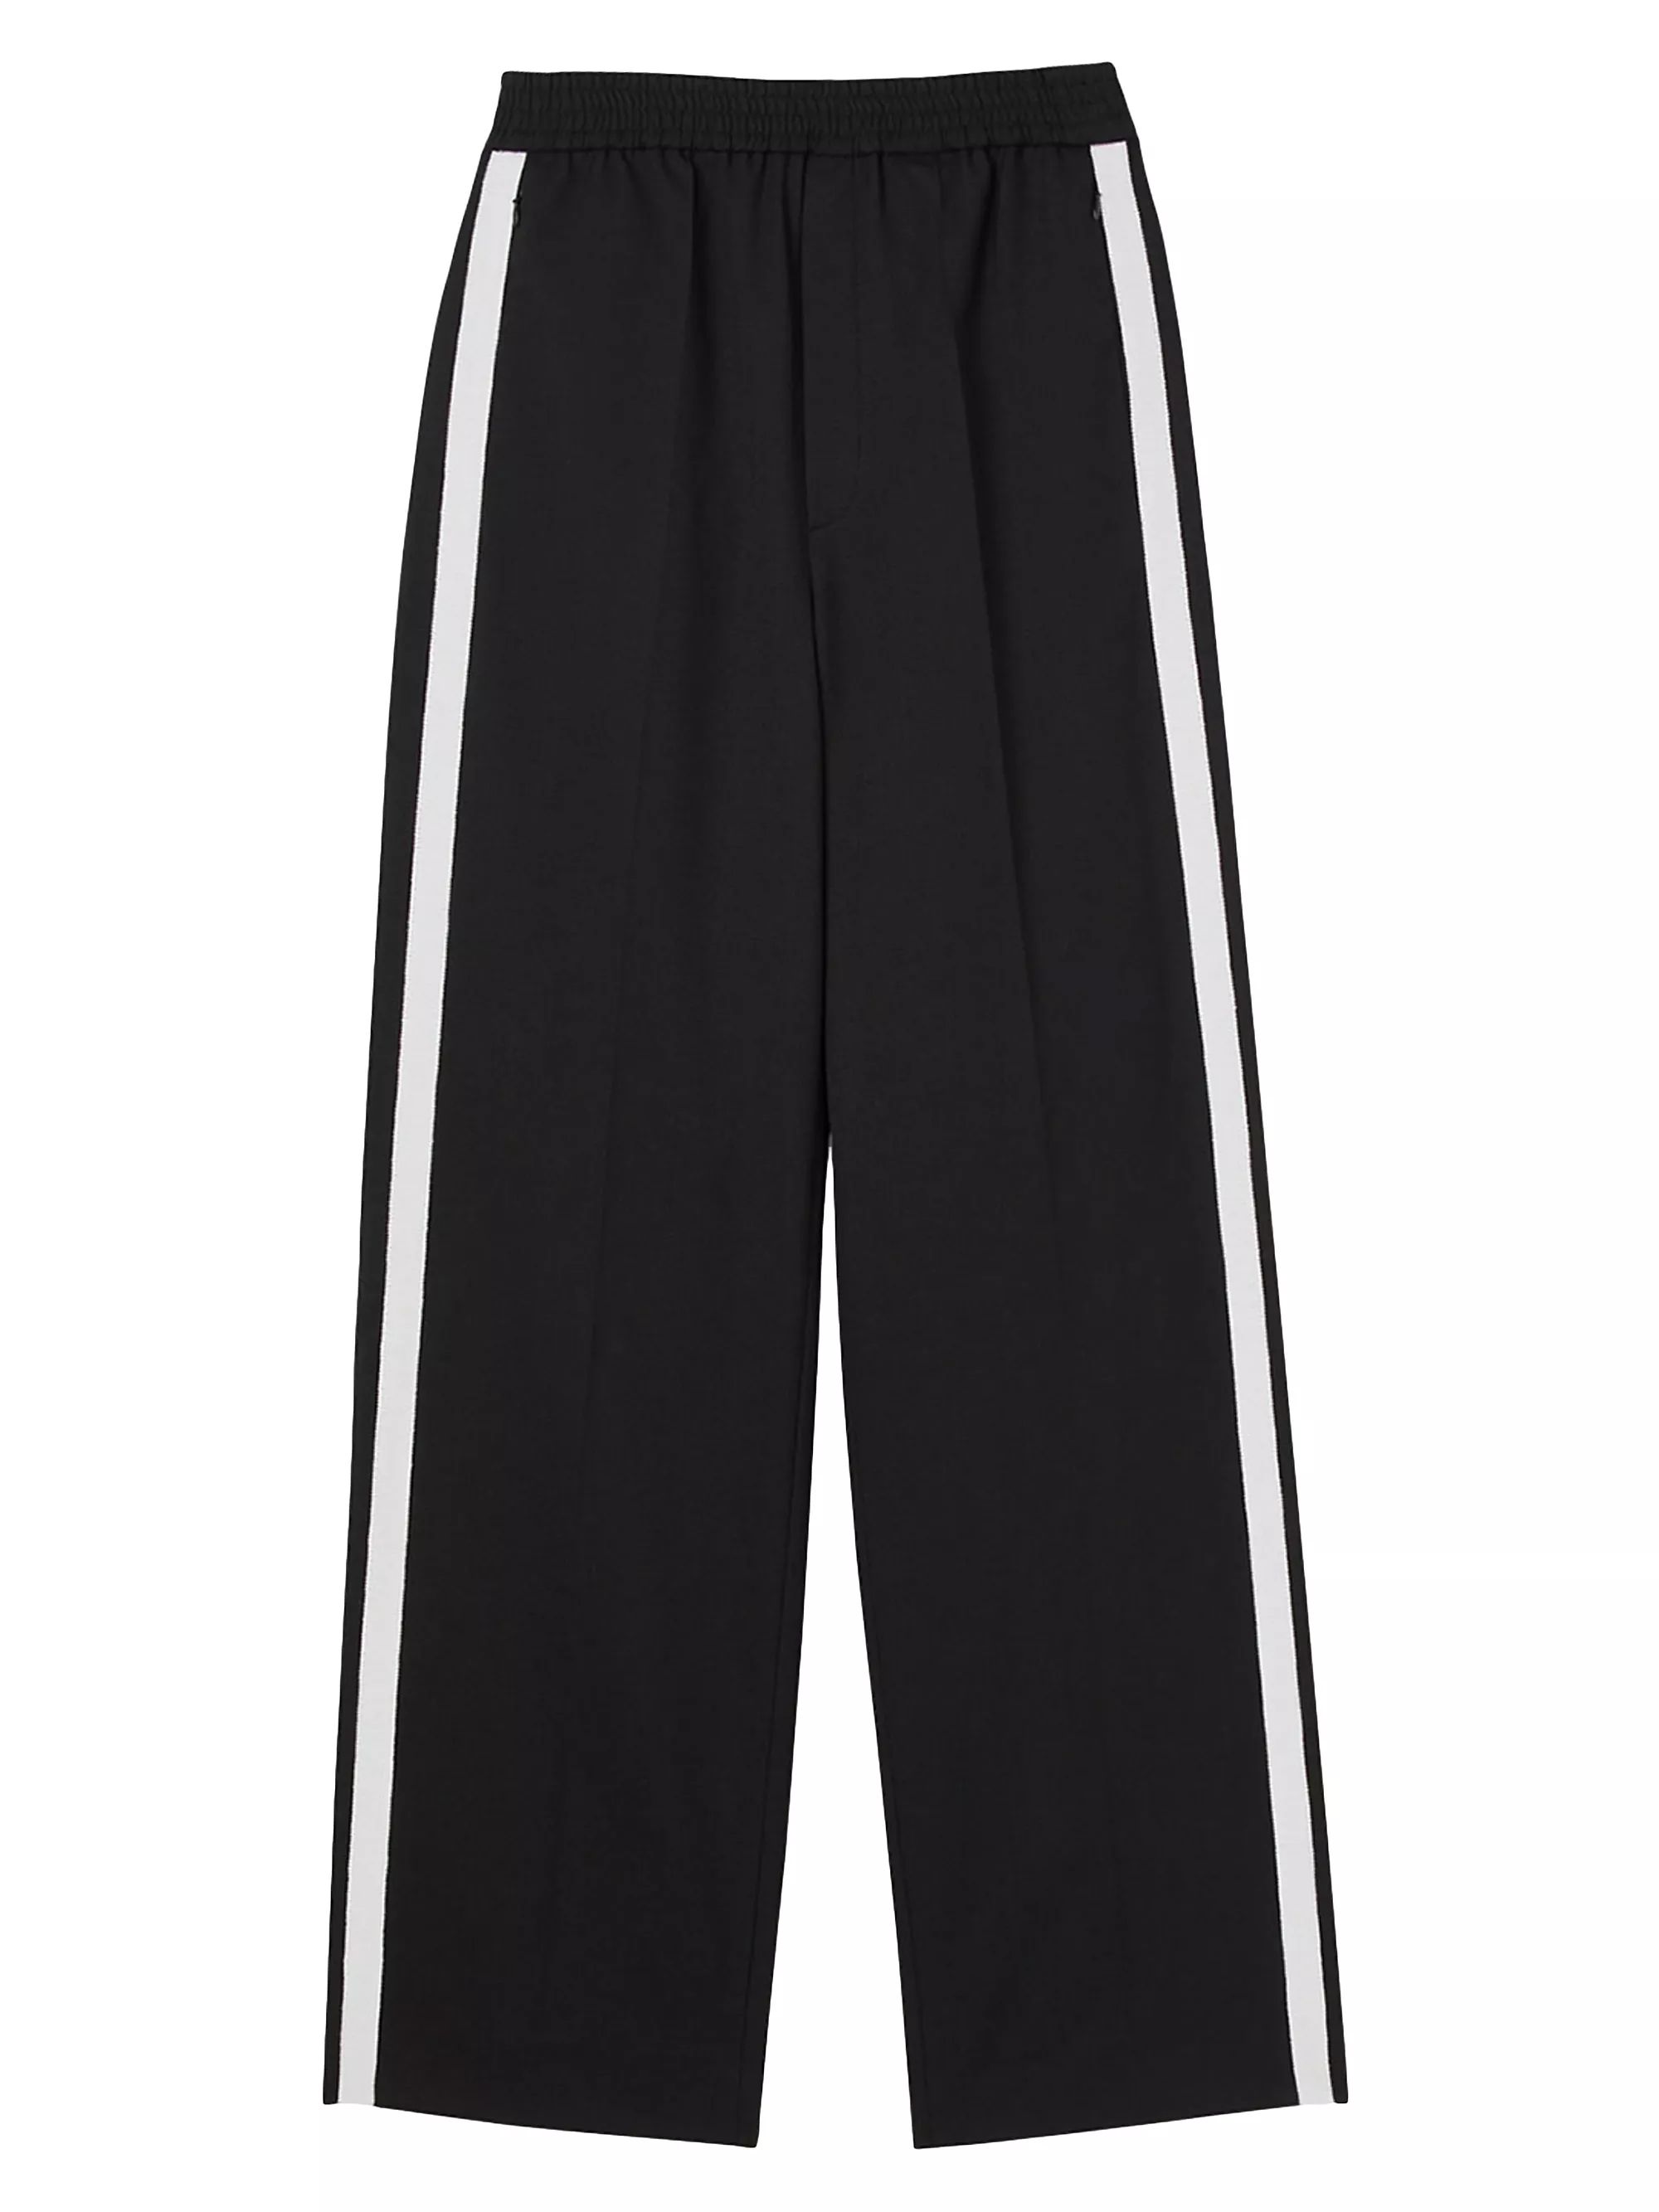 Shop Sandro Pants With Side Stripes | Saks Fifth Avenue | Saks Fifth Avenue